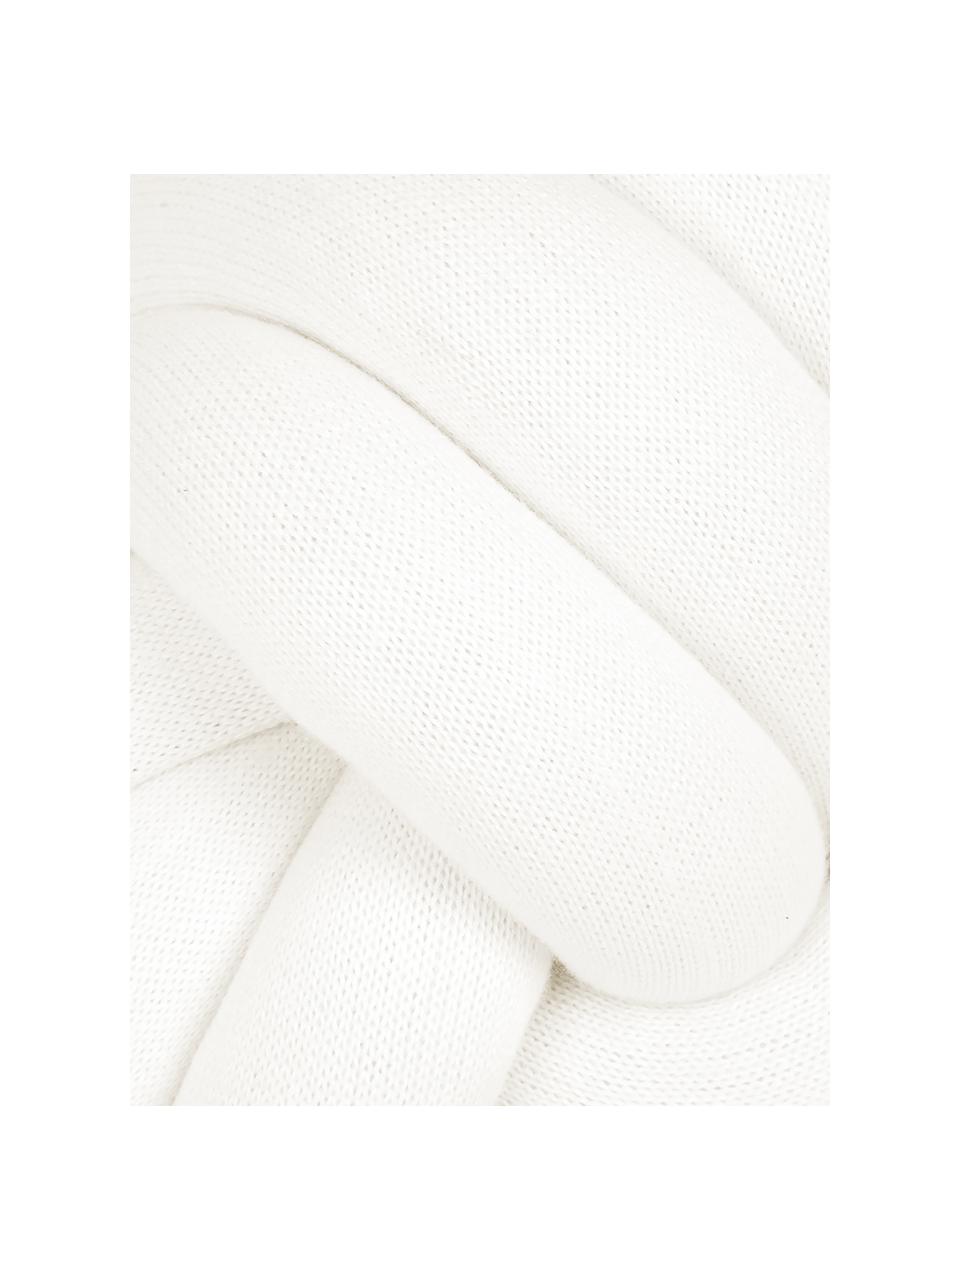 Cuscino annodato Twist, Bianco, Ø 30 cm